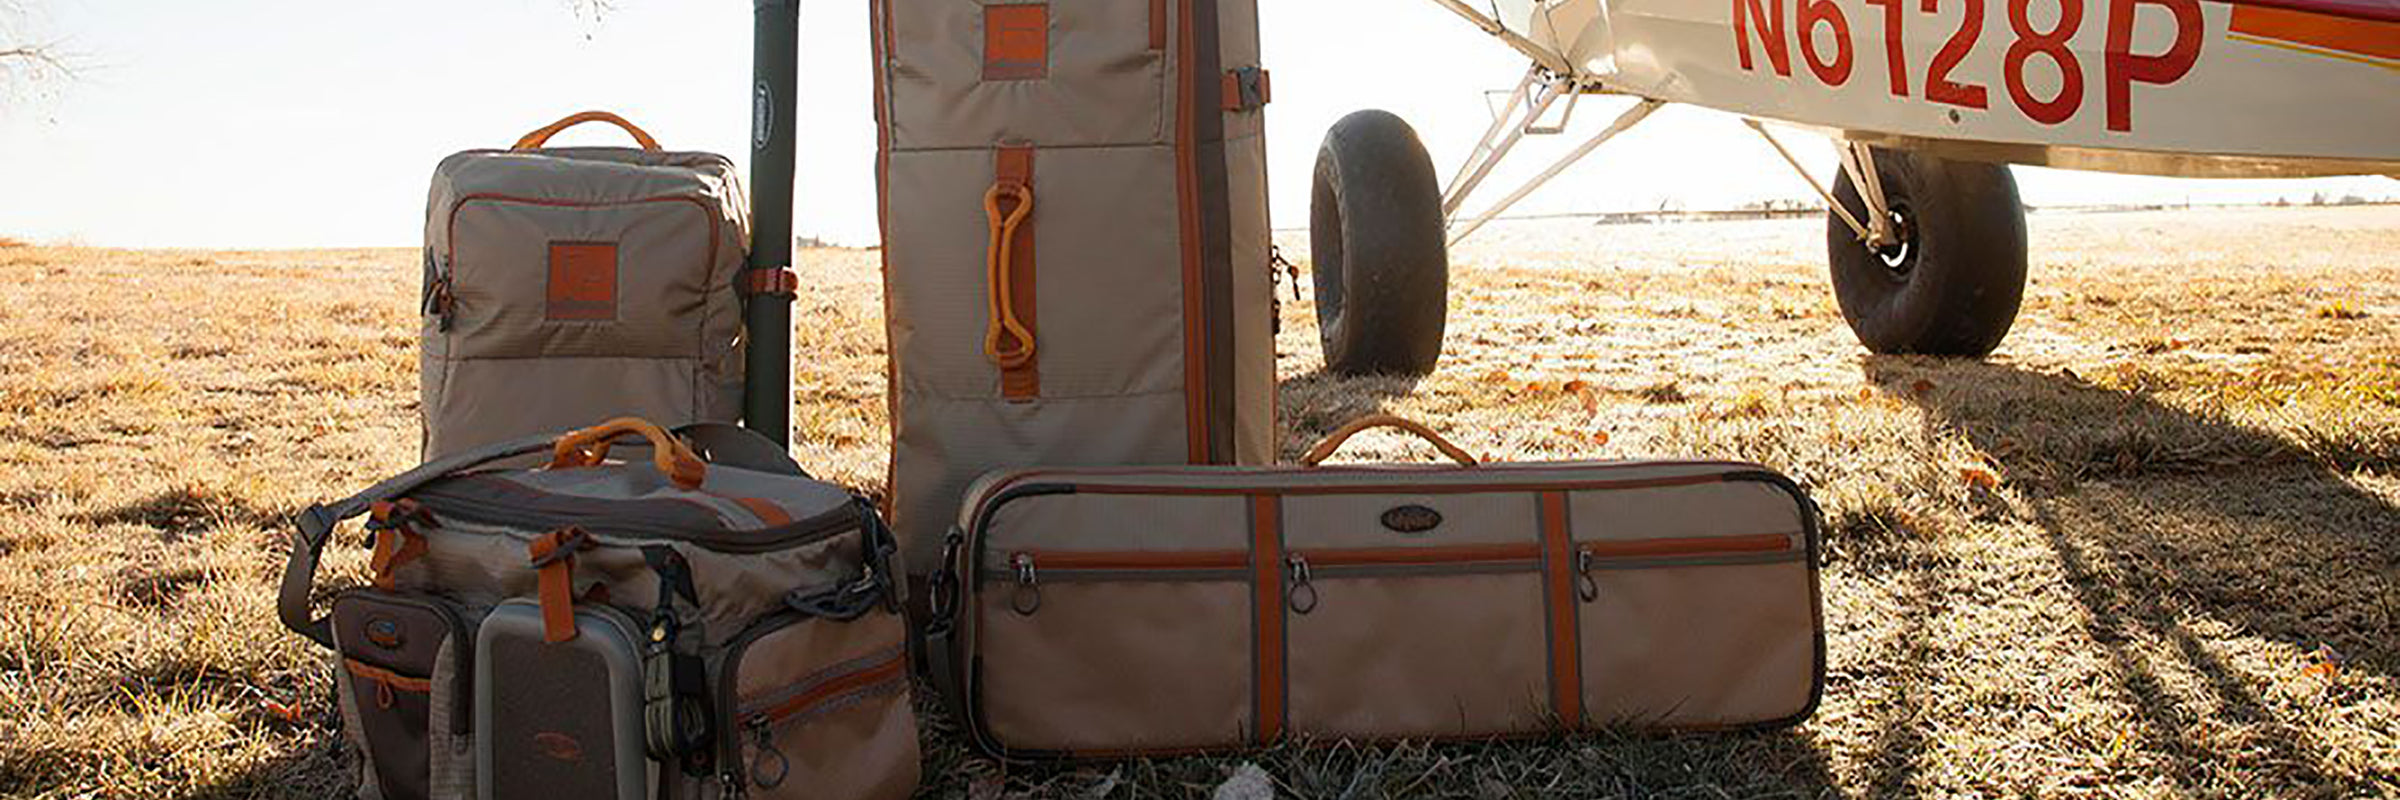 Luggage, Rolling Duffels & Bags